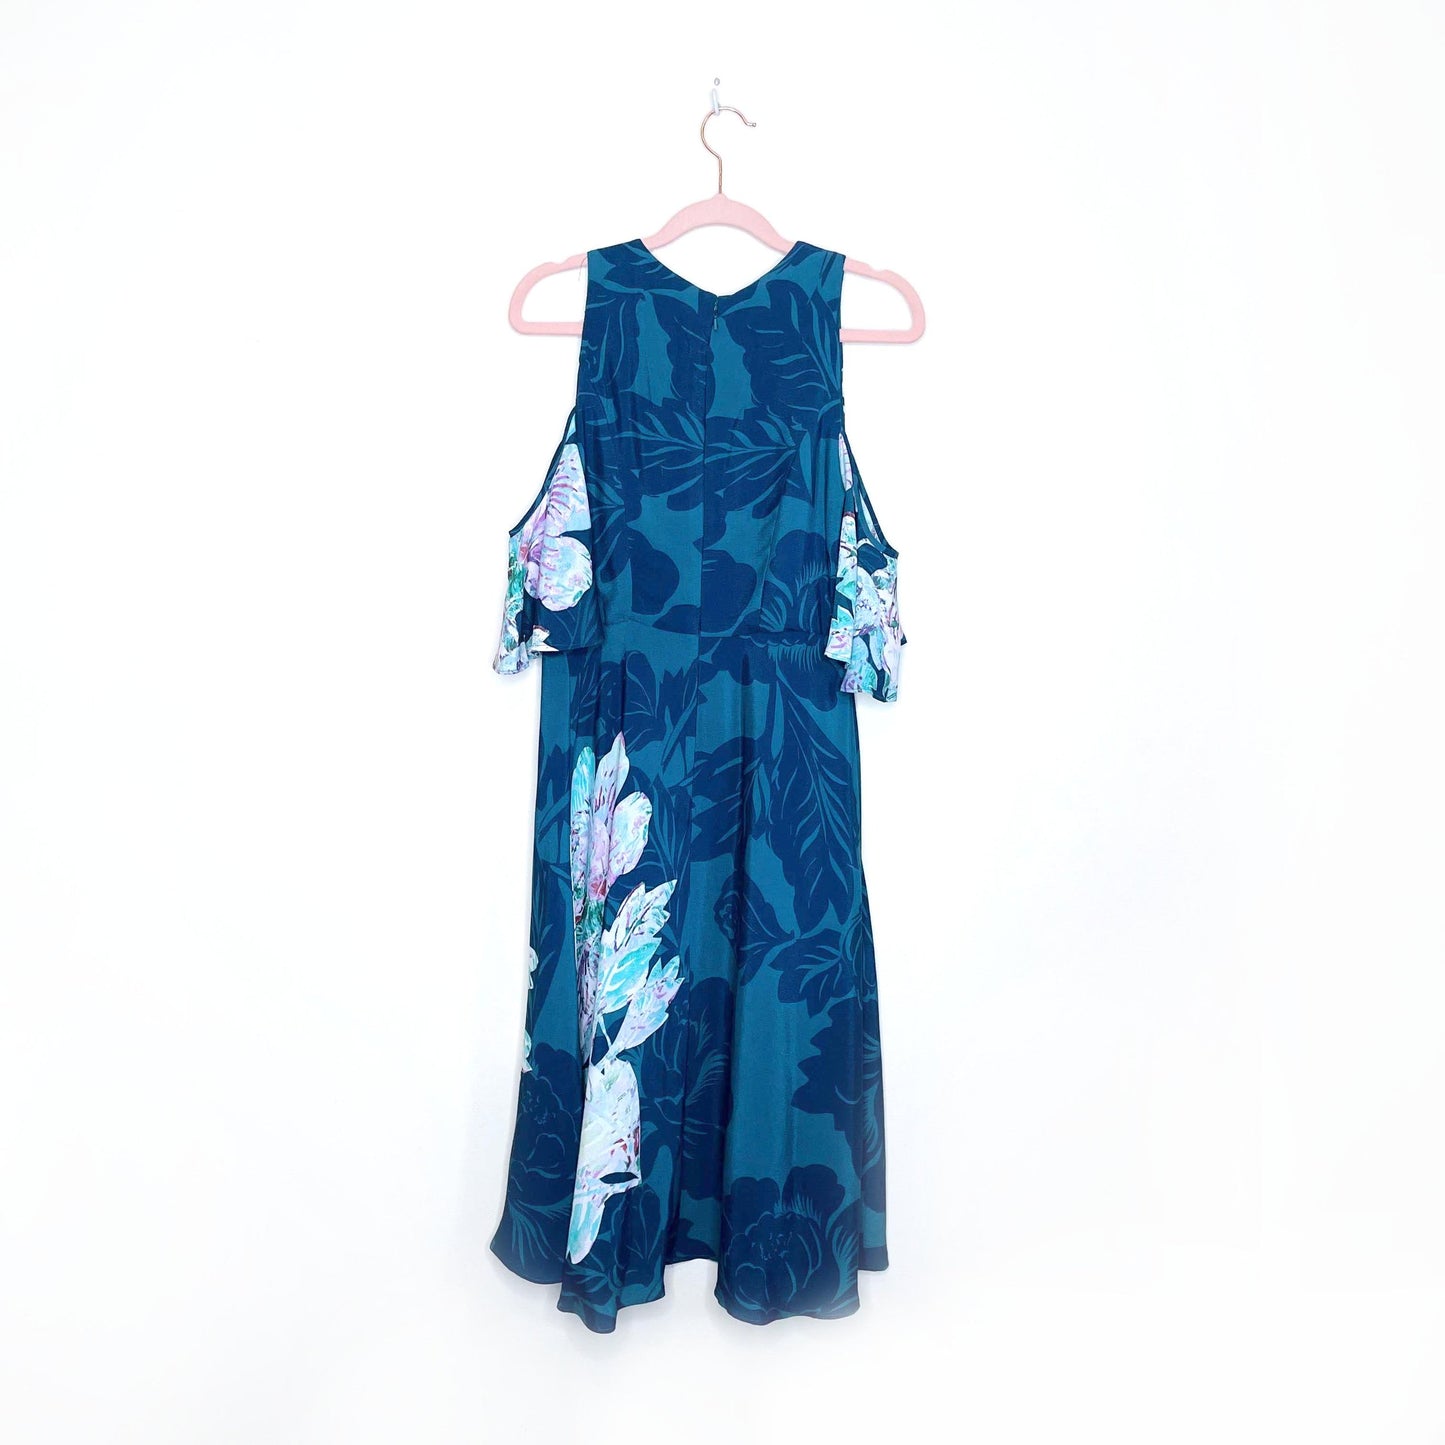 maeve elia cold shoulder floral midi dress - size 4